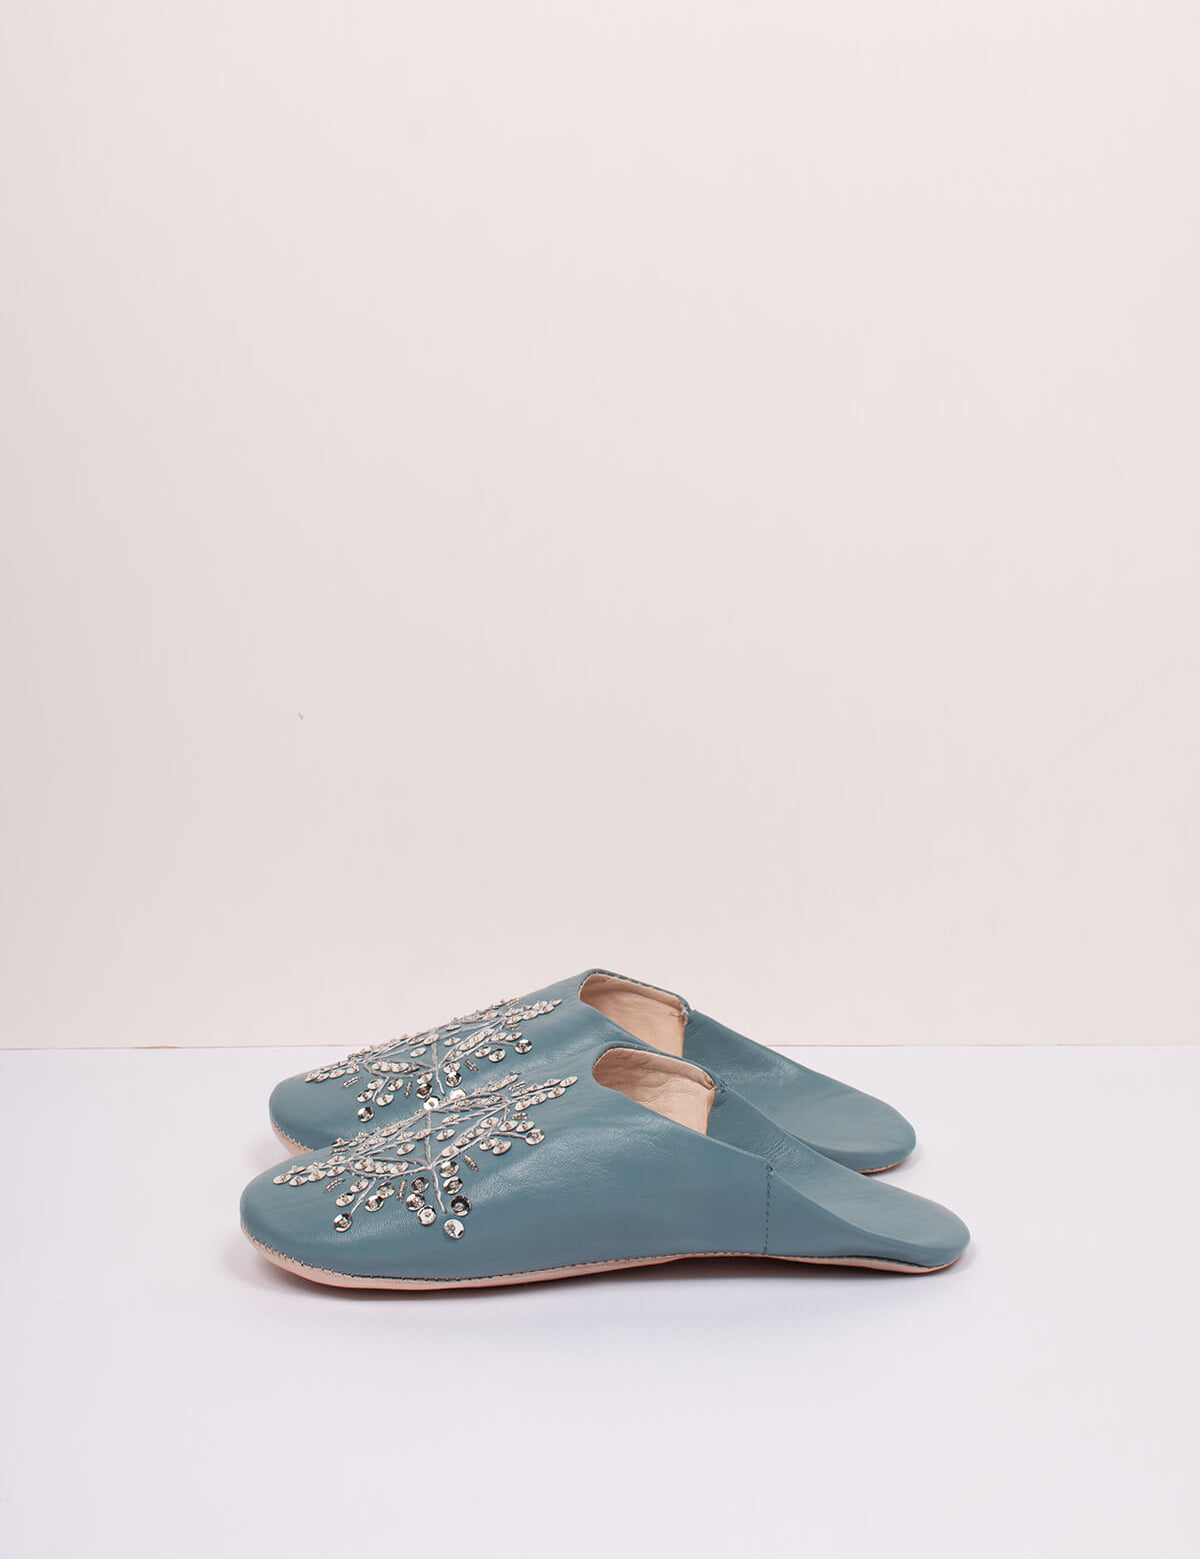 bohemia-design-babouche-sequin-slippers-slate-grey_752a55f9-335a-4ee5-86e6-2604b31f71ba.jpg